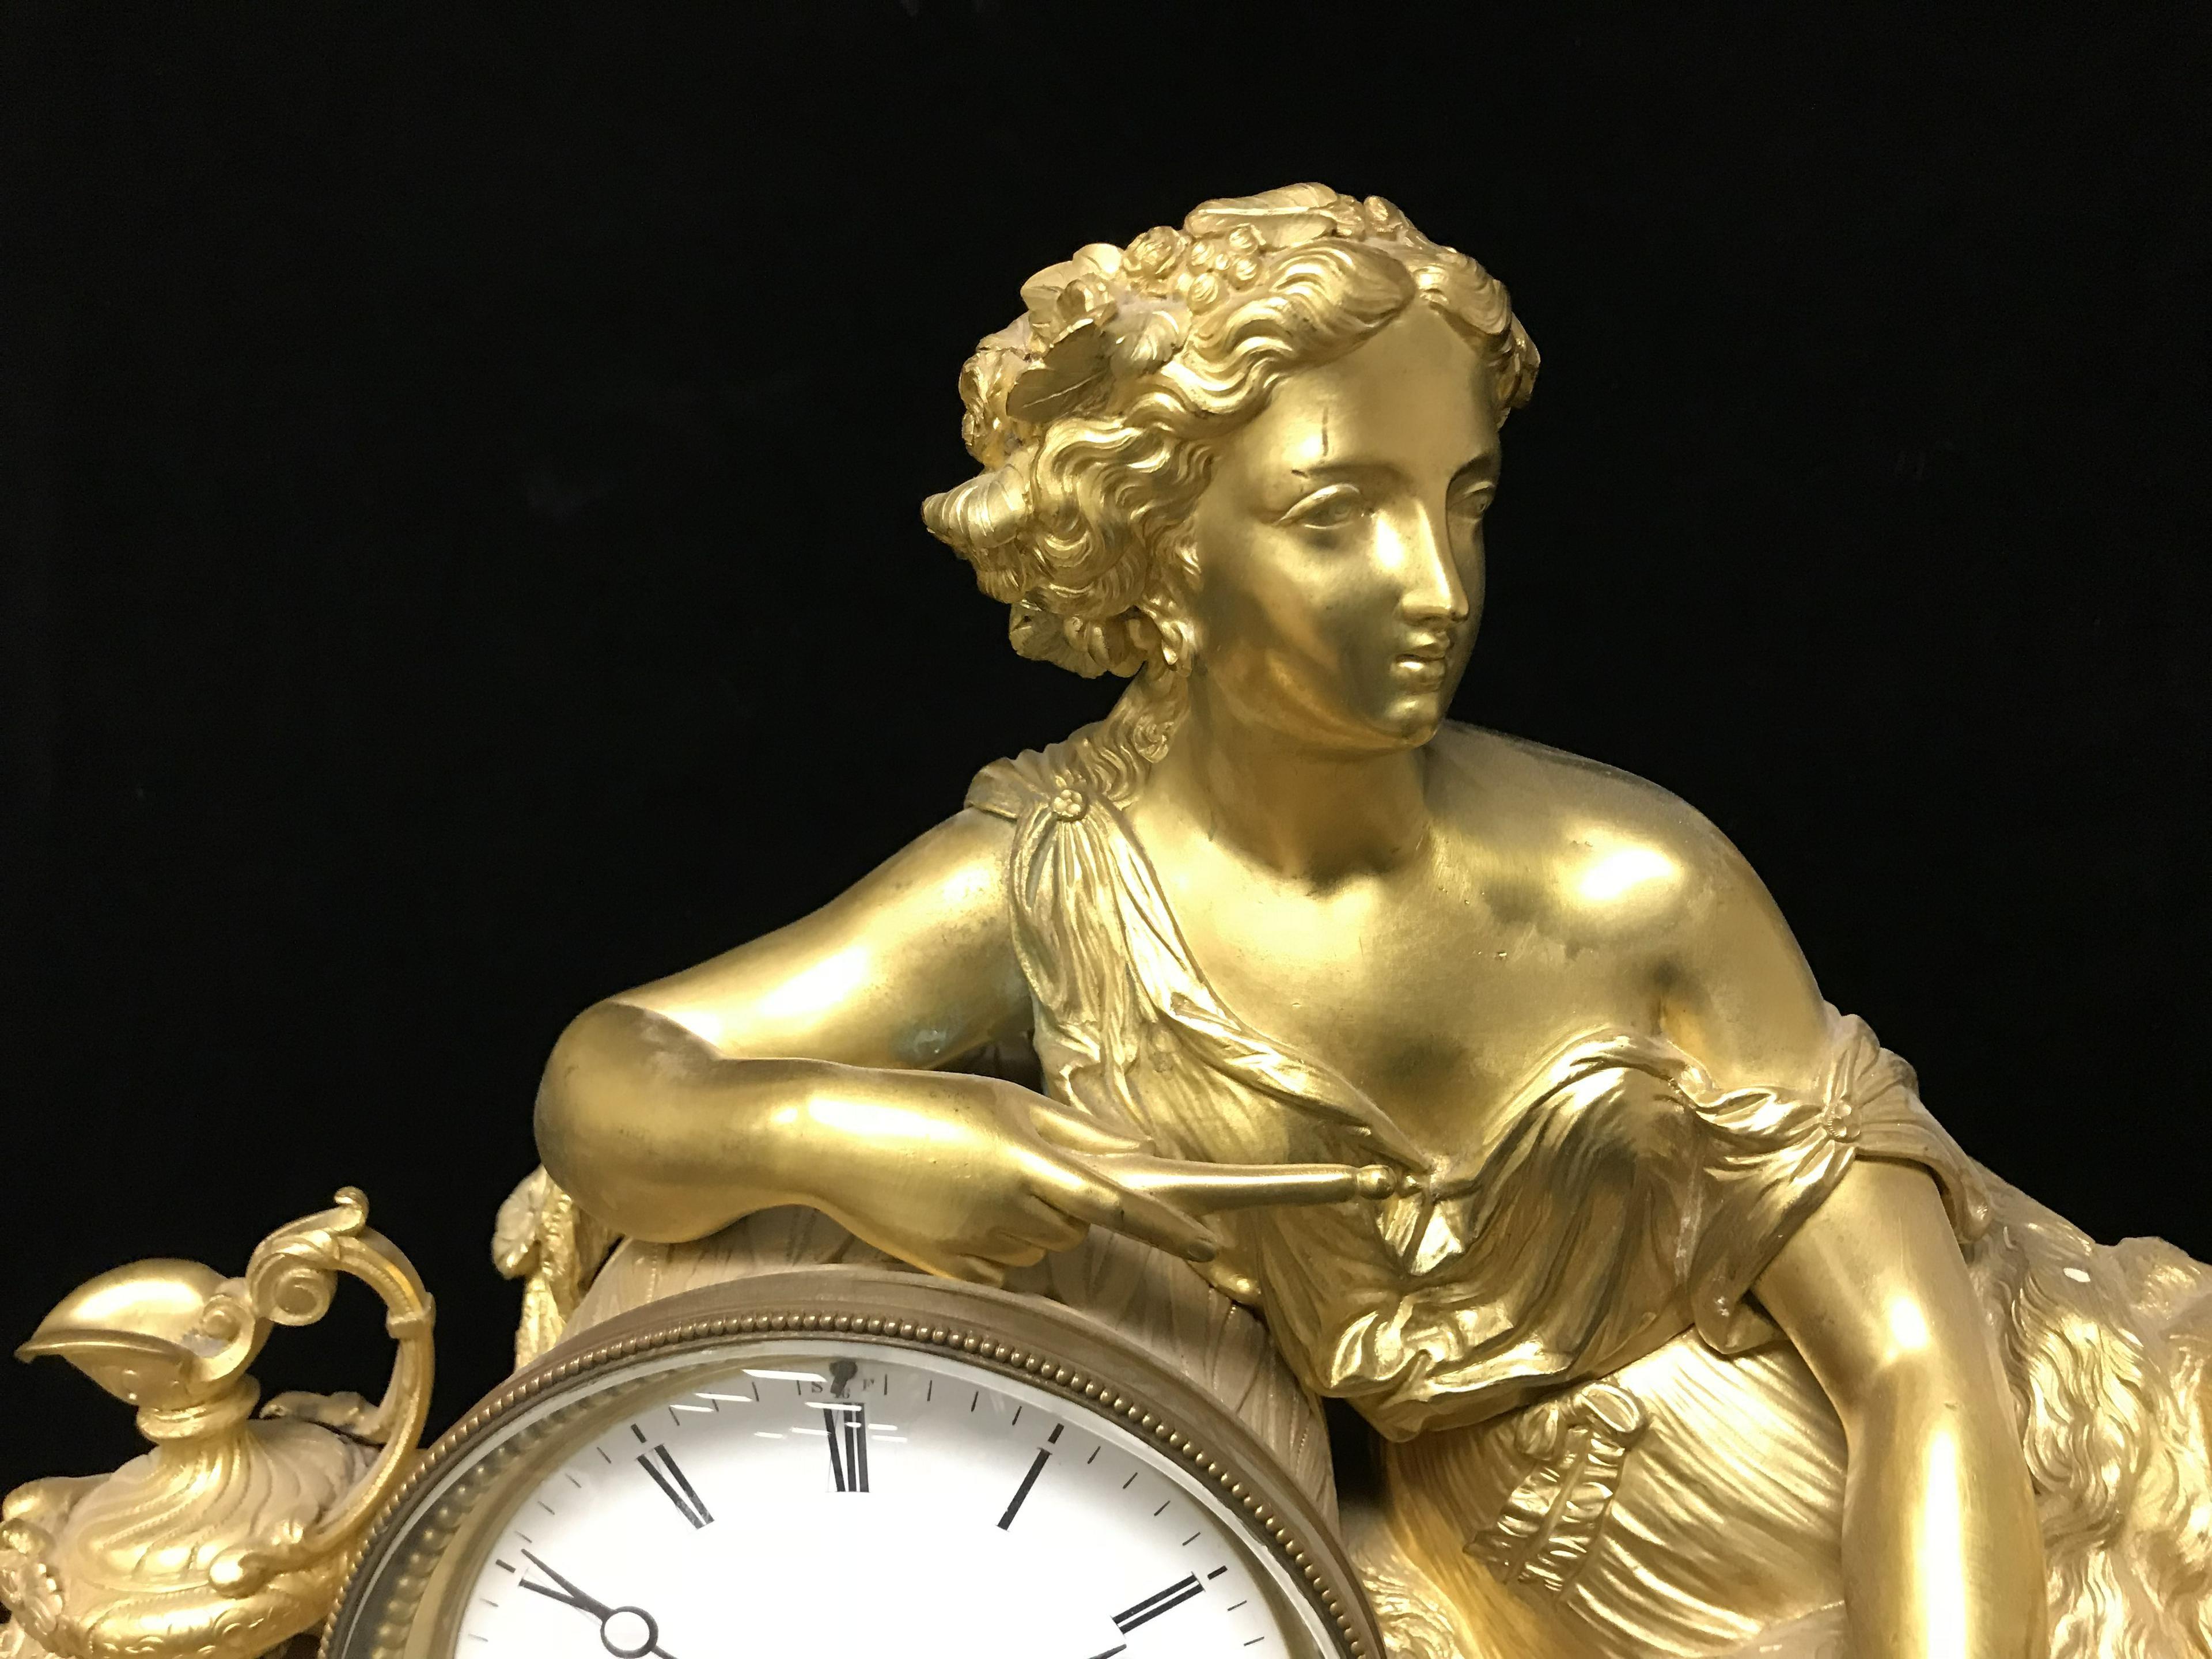 Antique Gilt Bronze French Mantle Clock - Sculpture by Unknown